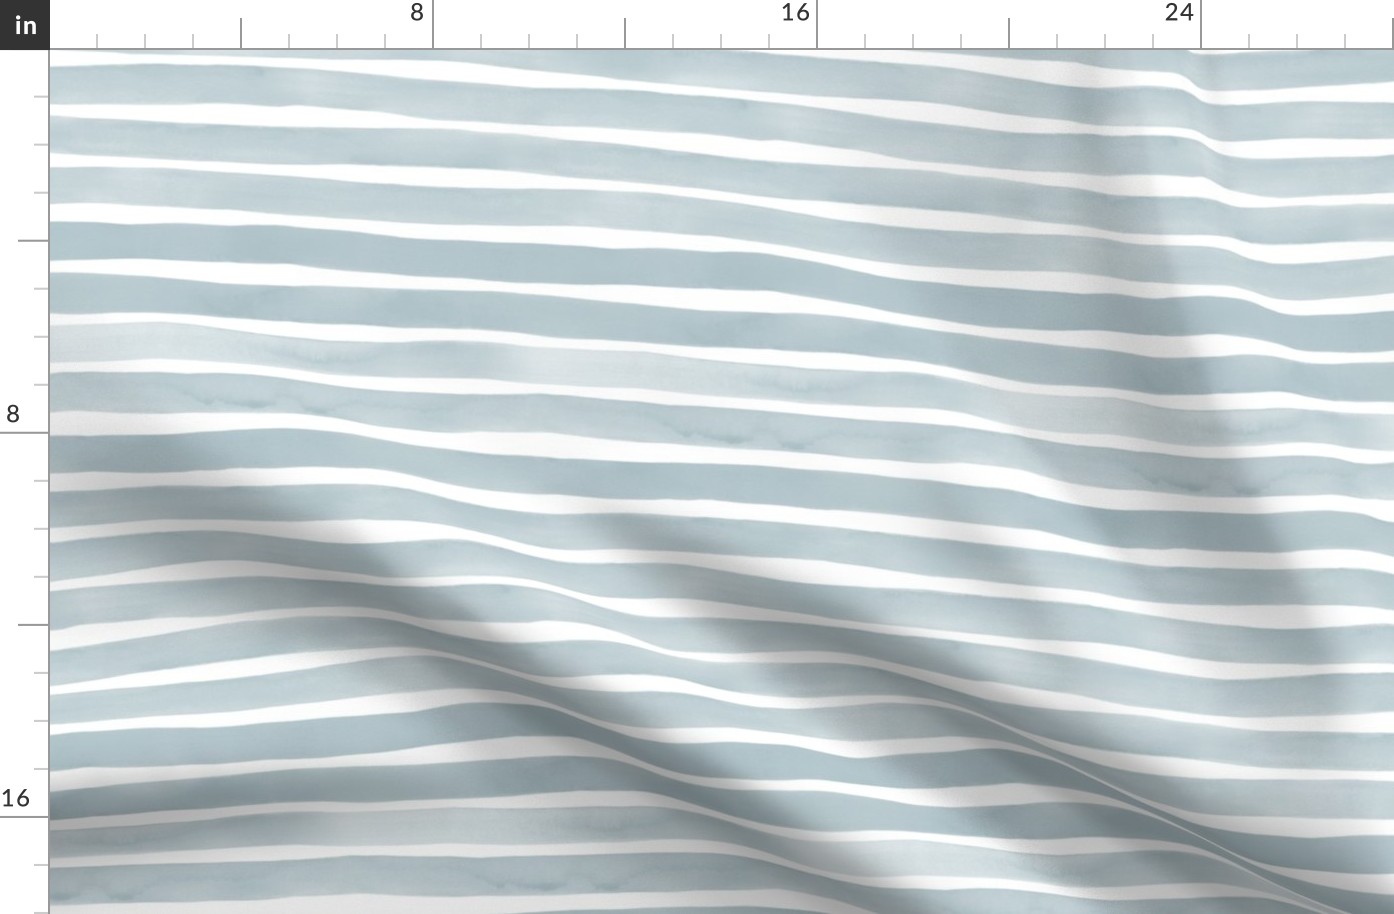 Watercolor Stripes M+M Slate by Friztin